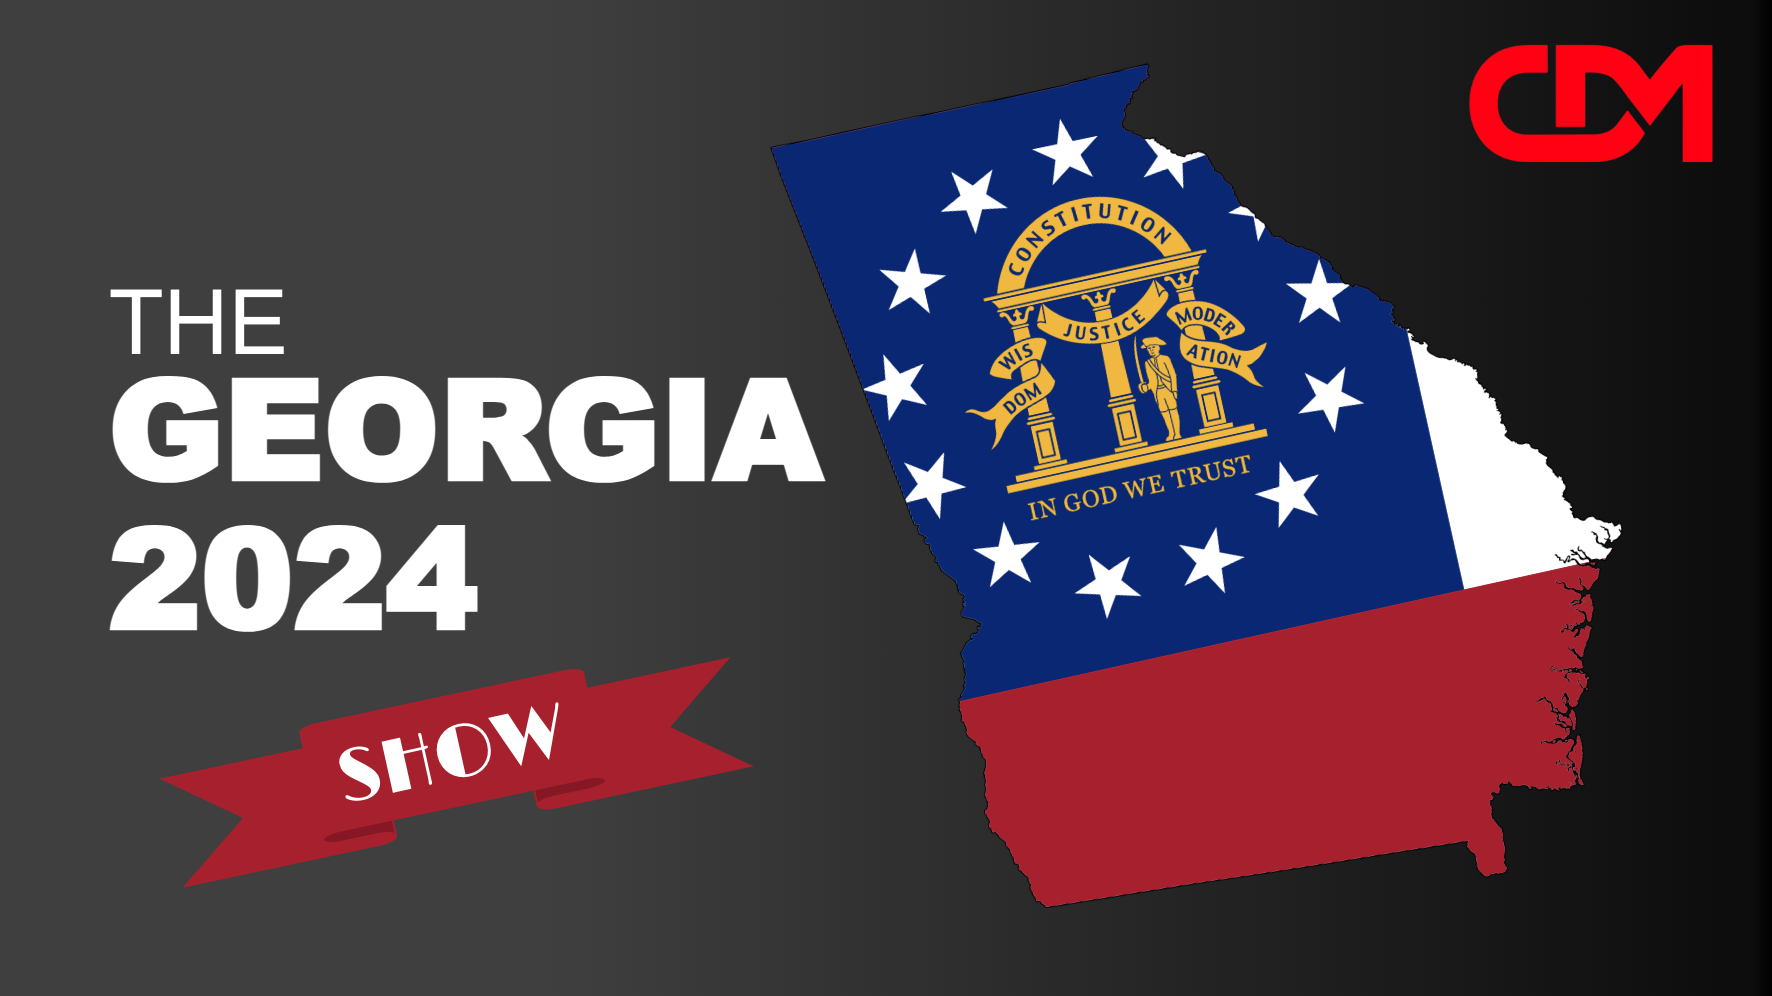 The Georgia 2024 Show! A Convention "Coup" Against Trump?